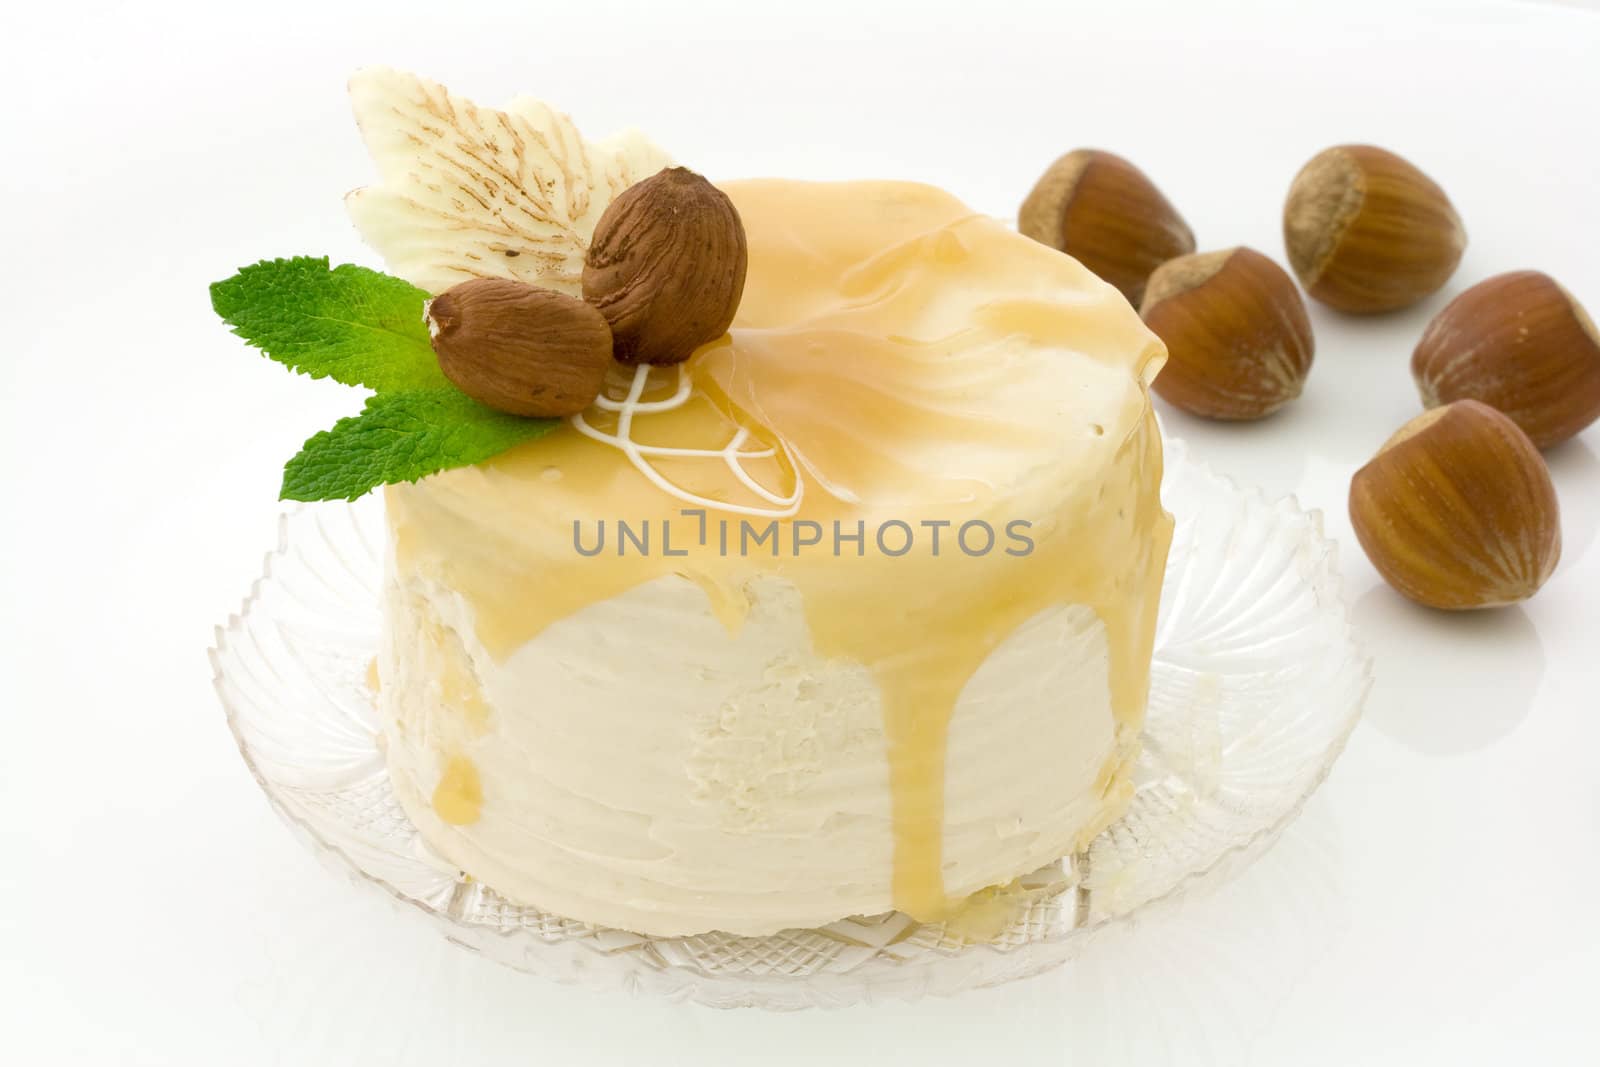 Maple and hazelnut cake by Hbak